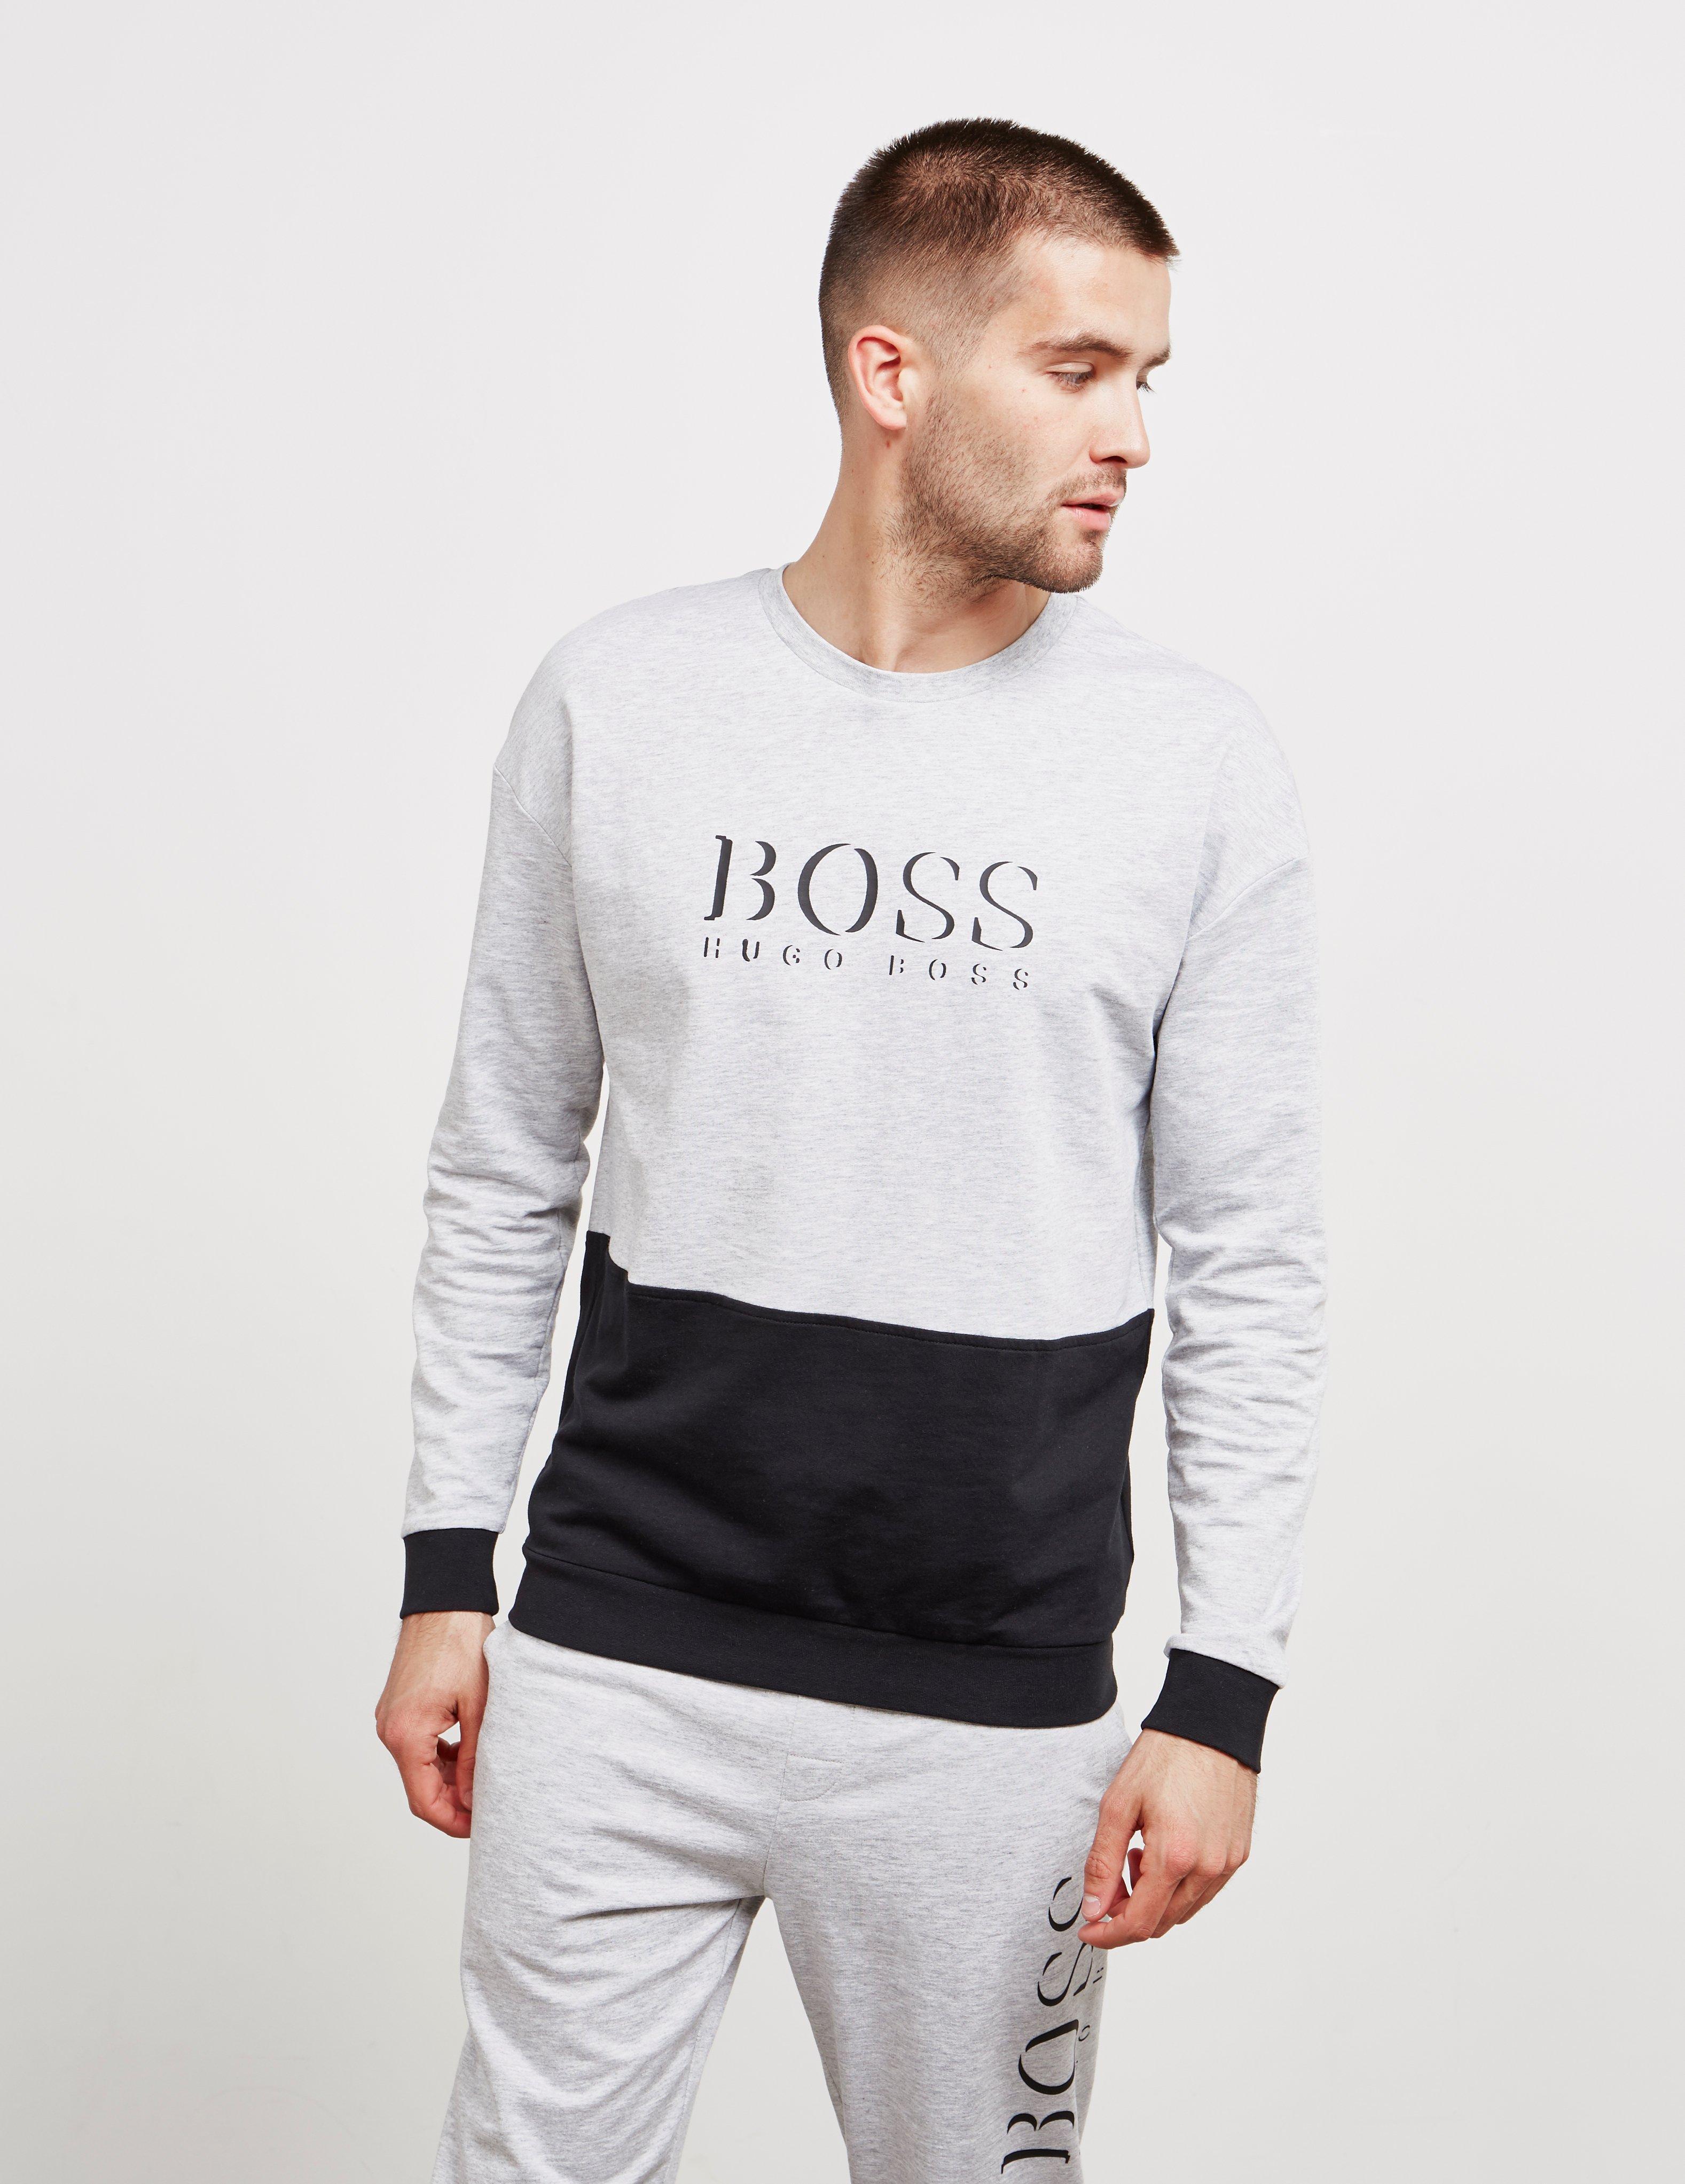 BOSS Authentic Split Sweatshirt Grey in Gray for Men - Lyst